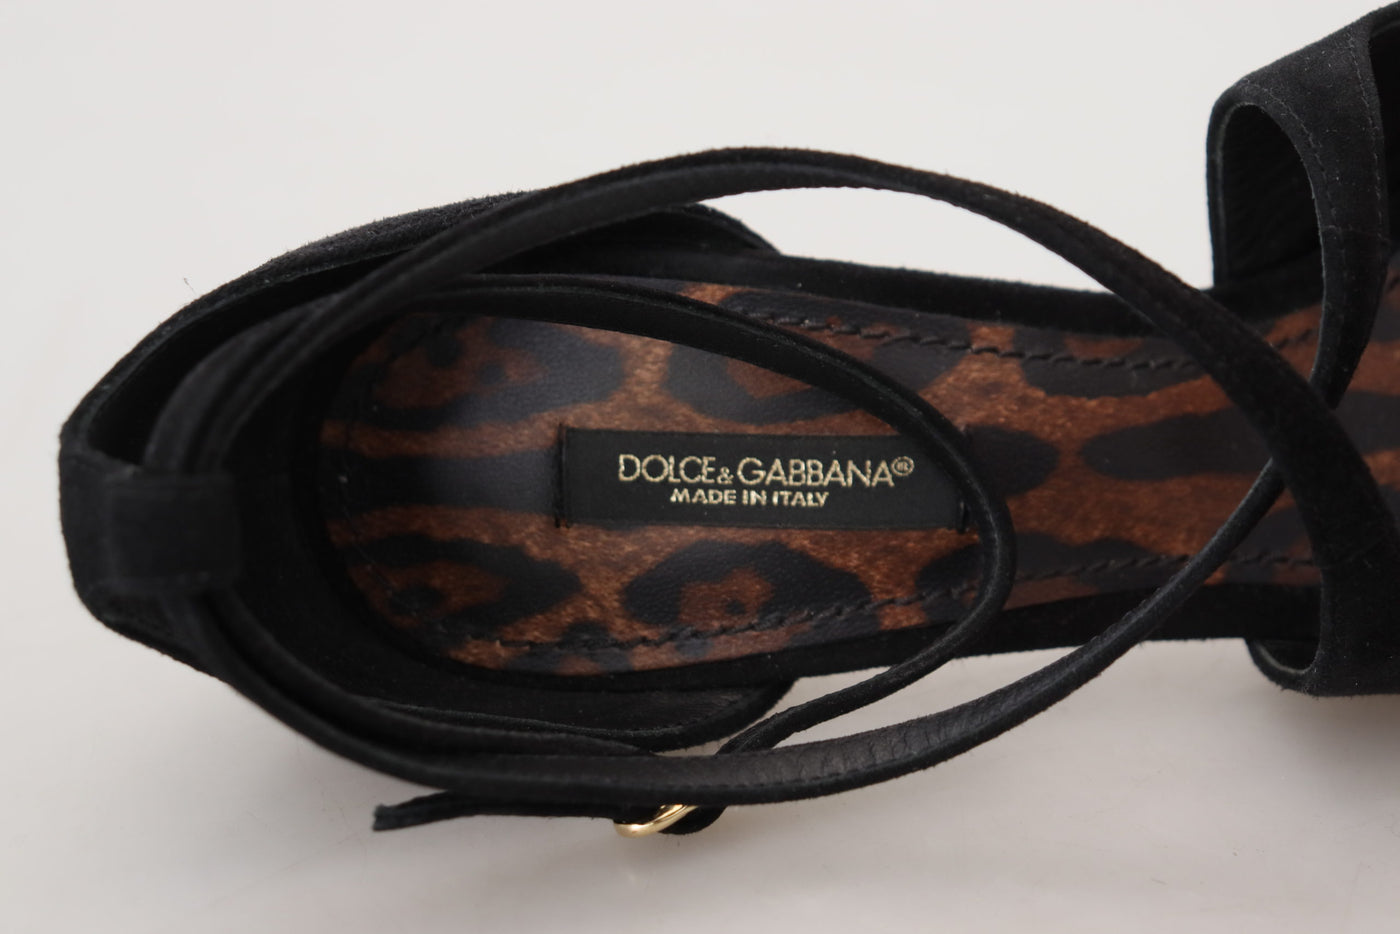 Dolce & Gabbana Black Suede Ankle Strap Pumps Heels Shoes